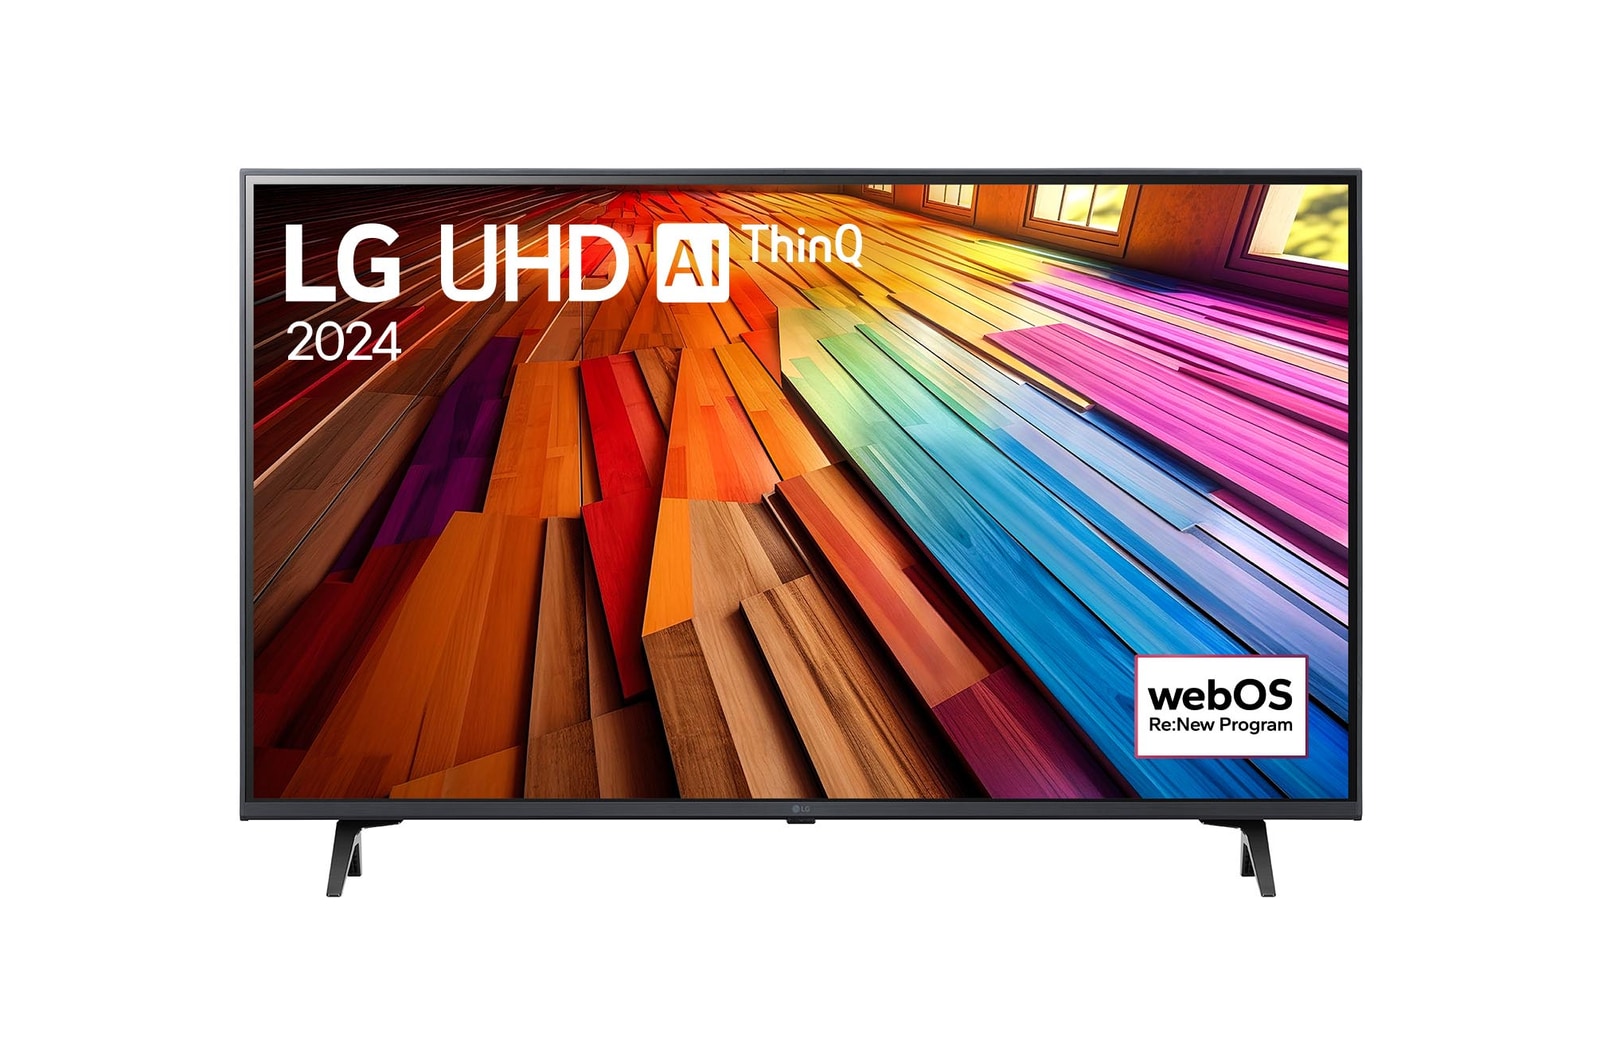 LG UHD TV UT80 的正面視圖，螢幕上顯示文字「LG UHD AI ThinQ, 2024」和 webOS Re:New Program 標誌